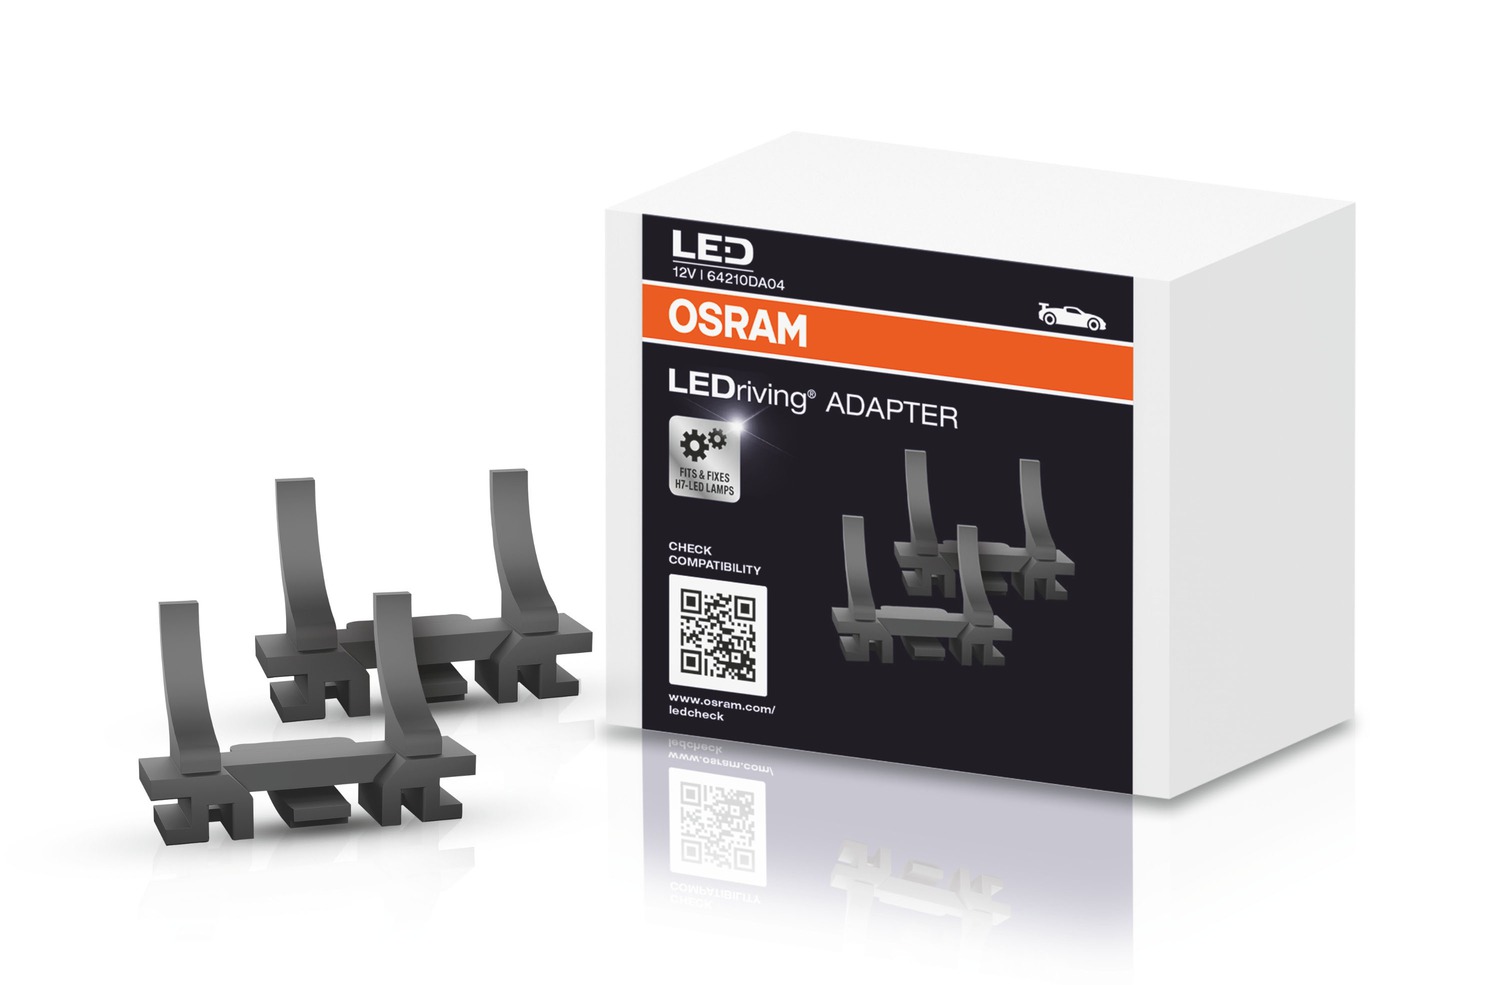 Obrázek produktu Osram LEDriving Adapter H7 64210DA04